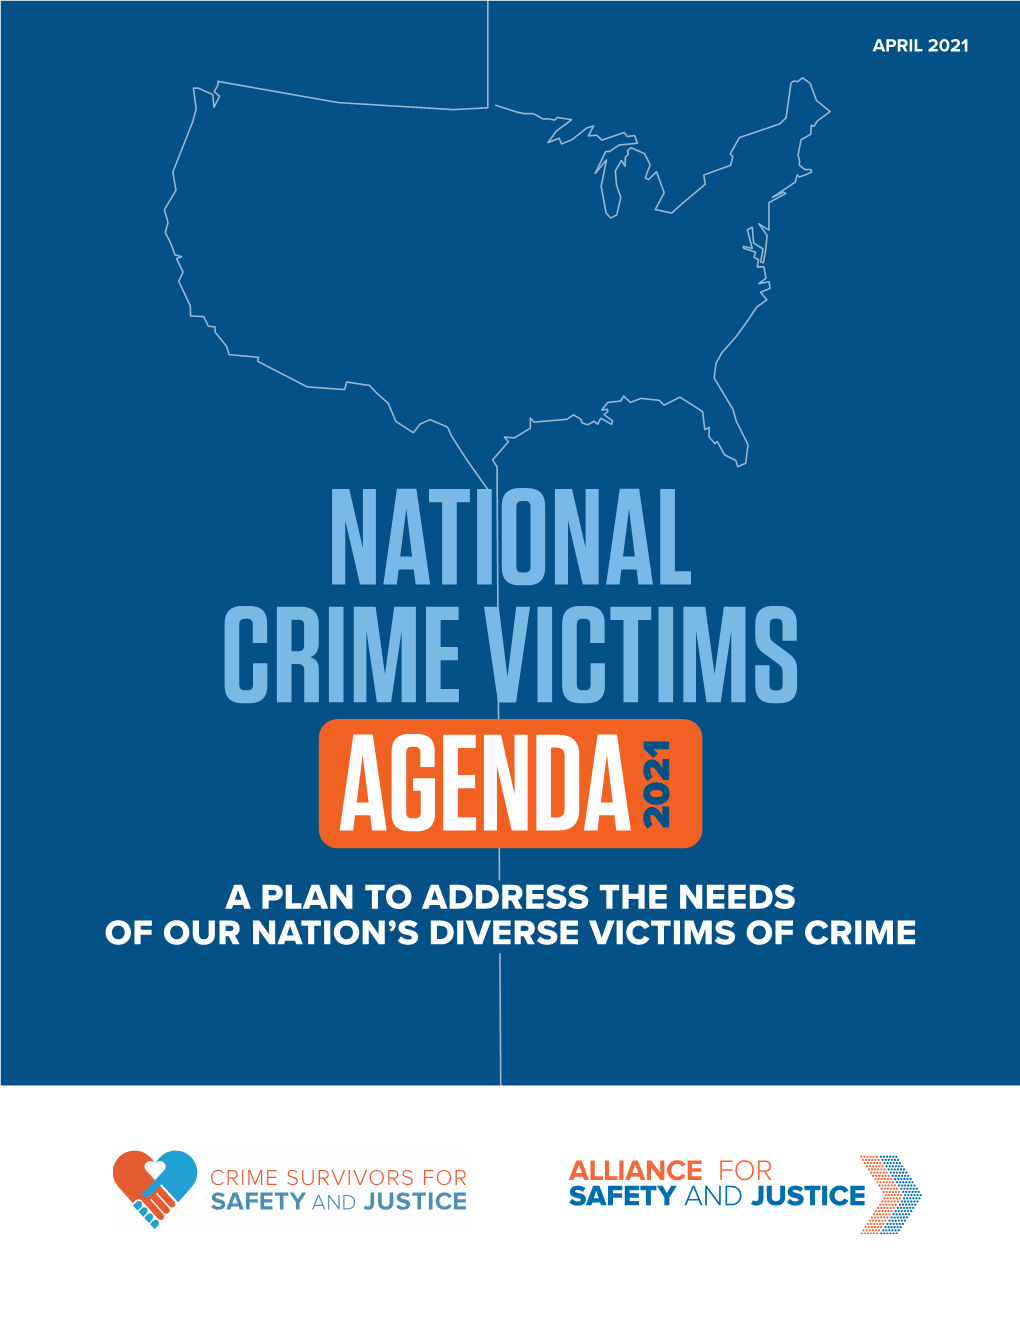 National Crime Victims Agenda